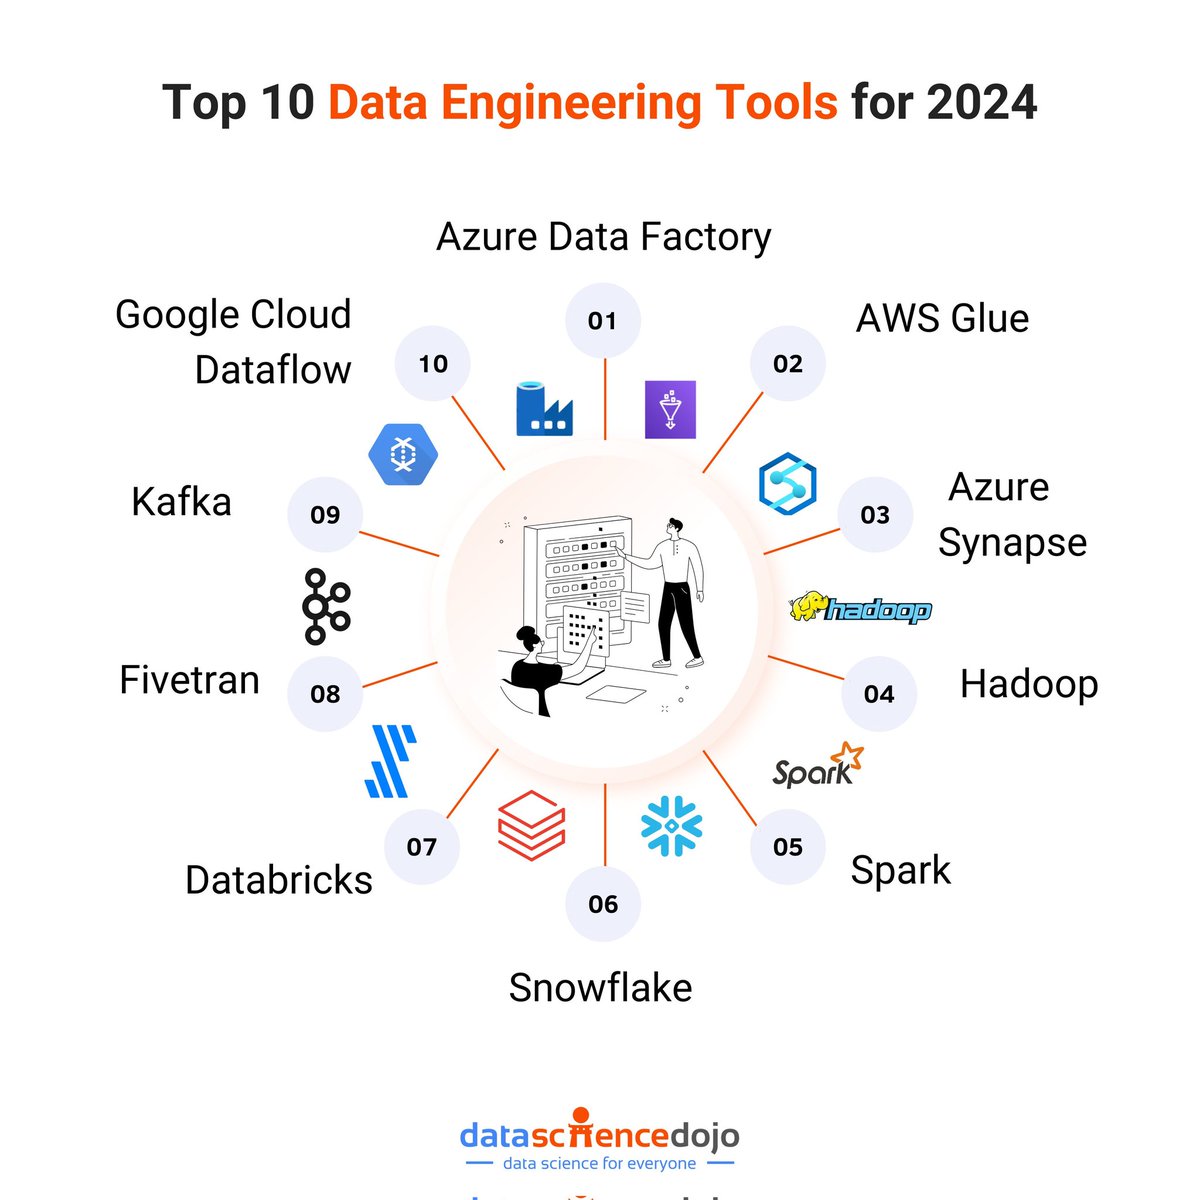 Top 10 data engineering tools for 2024! #AI #MachineLearning #DeepLearning #DataScience #BigData #Datalake #NLP #GenerativeAI #LLMs #OpenAI #Python #Code #100DaysOfCode @DataScienceDojo datasciencedojo.com/blog/data-engi… @SpirosMargaris @PawlowskiMario @mvollmer1 @gvalan @ipfconline1…